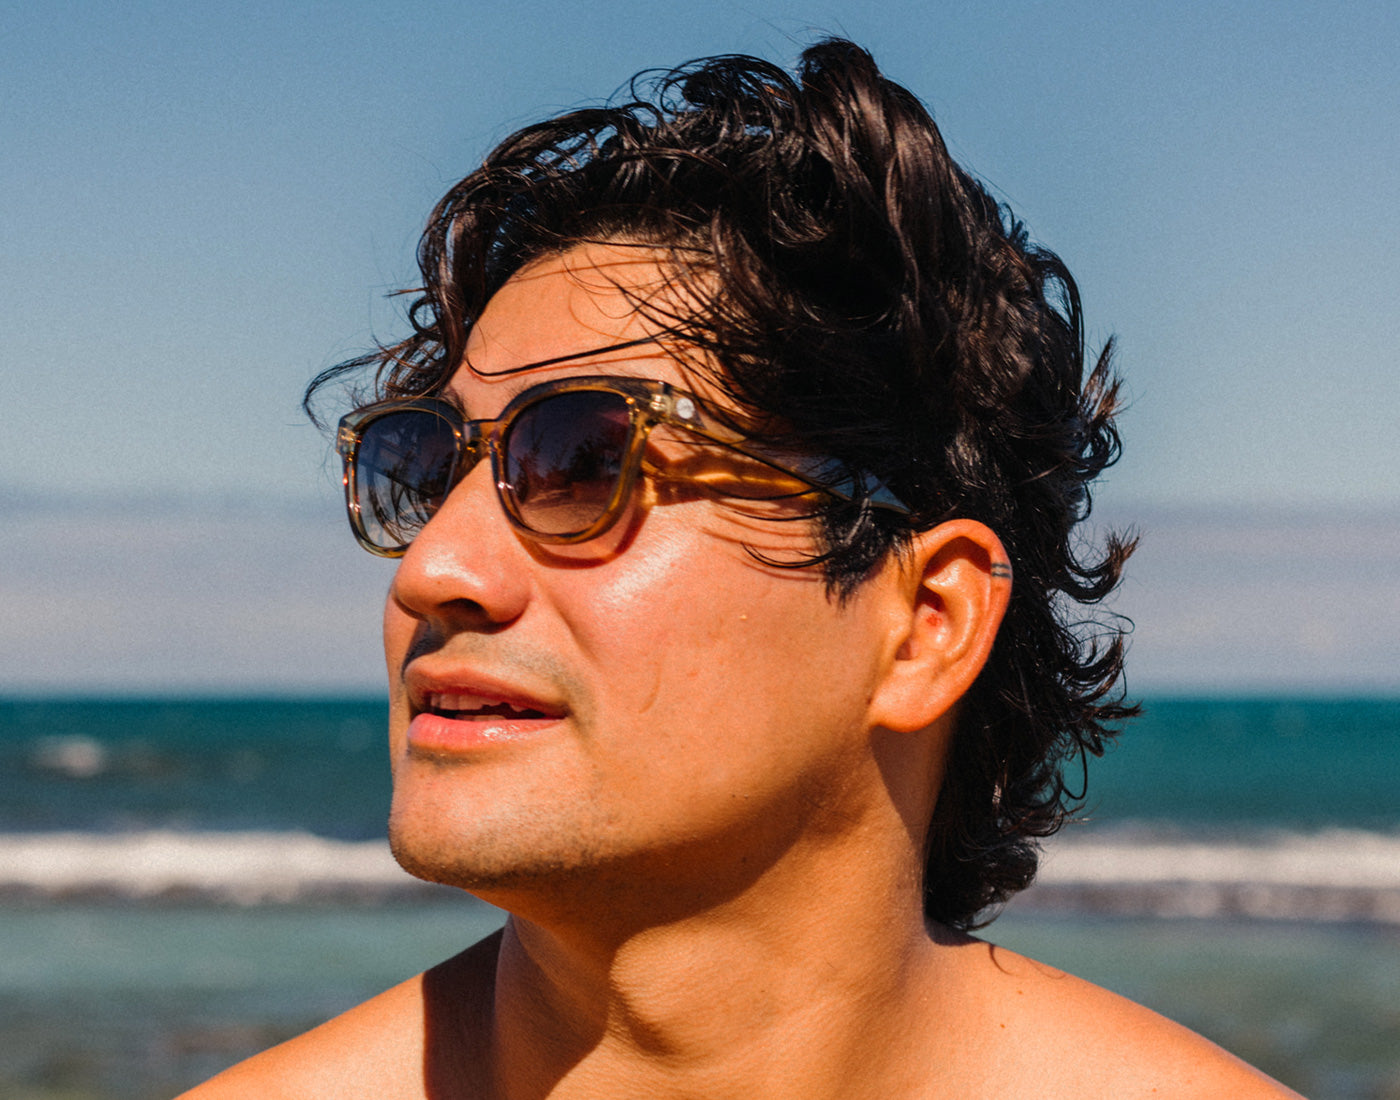 profile of man on beach wearing sunski miho sunglasses